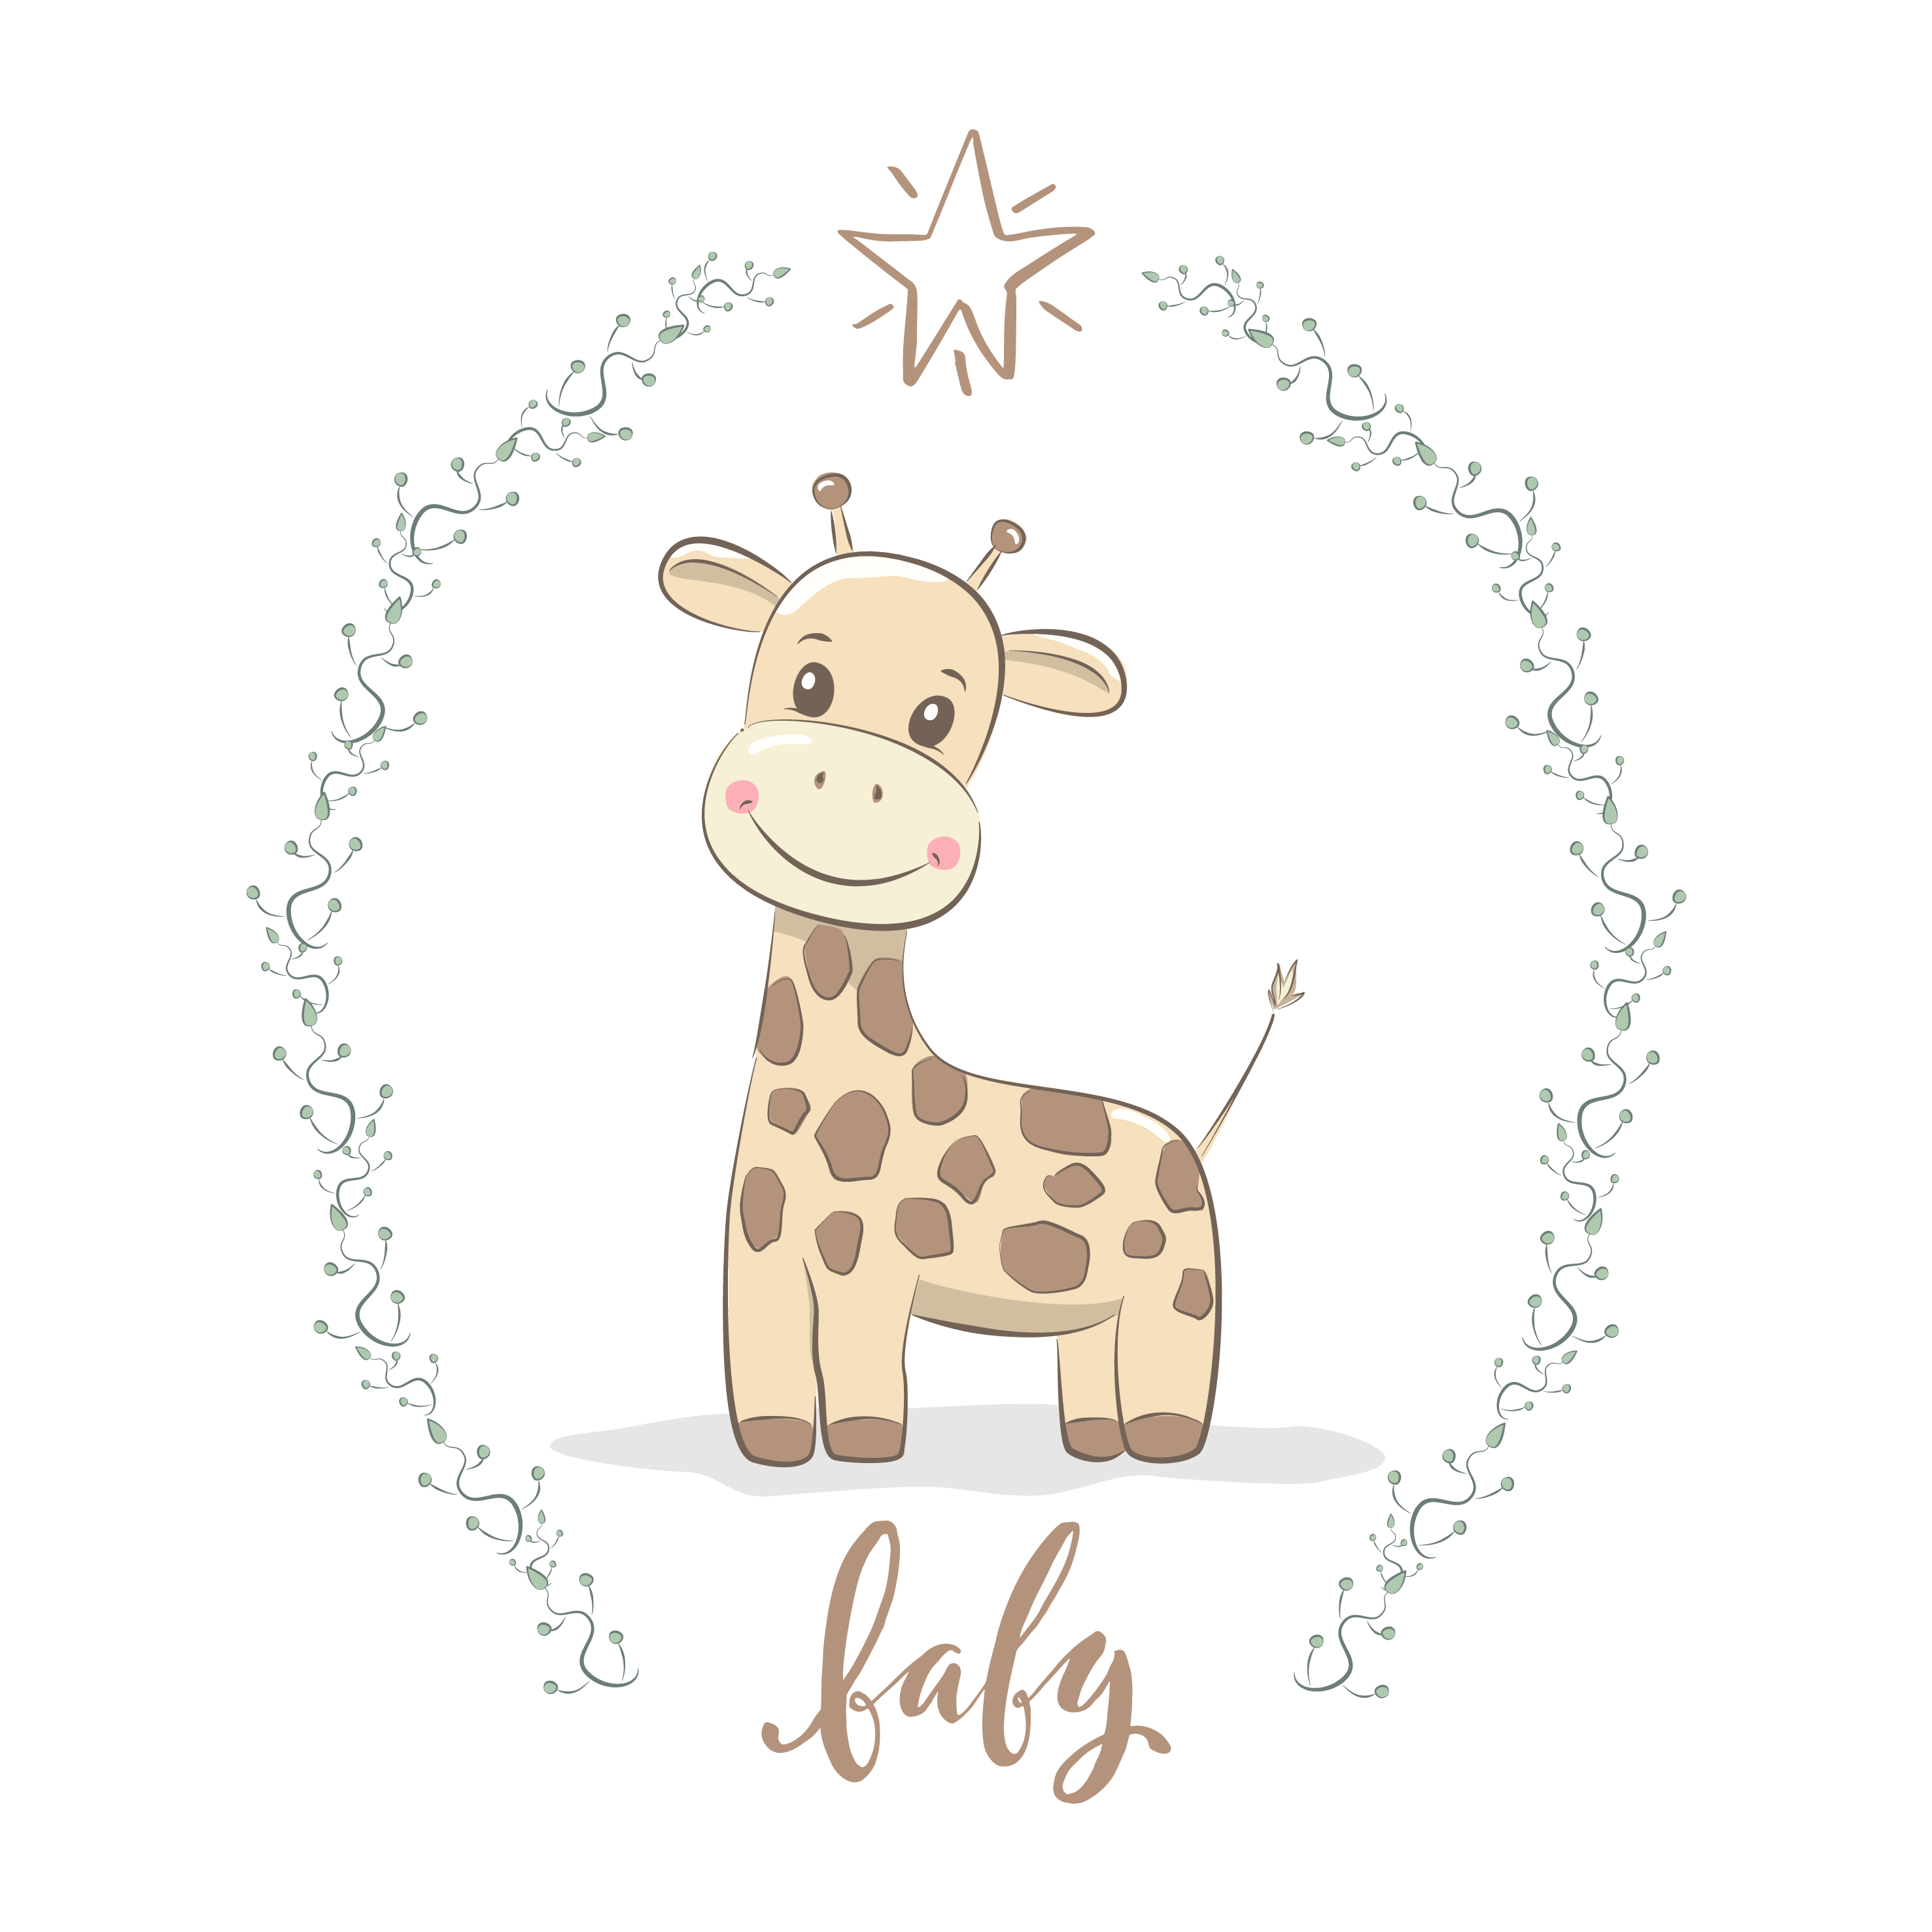 Download Cute giraffe baby - Download Free Vectors, Clipart ...